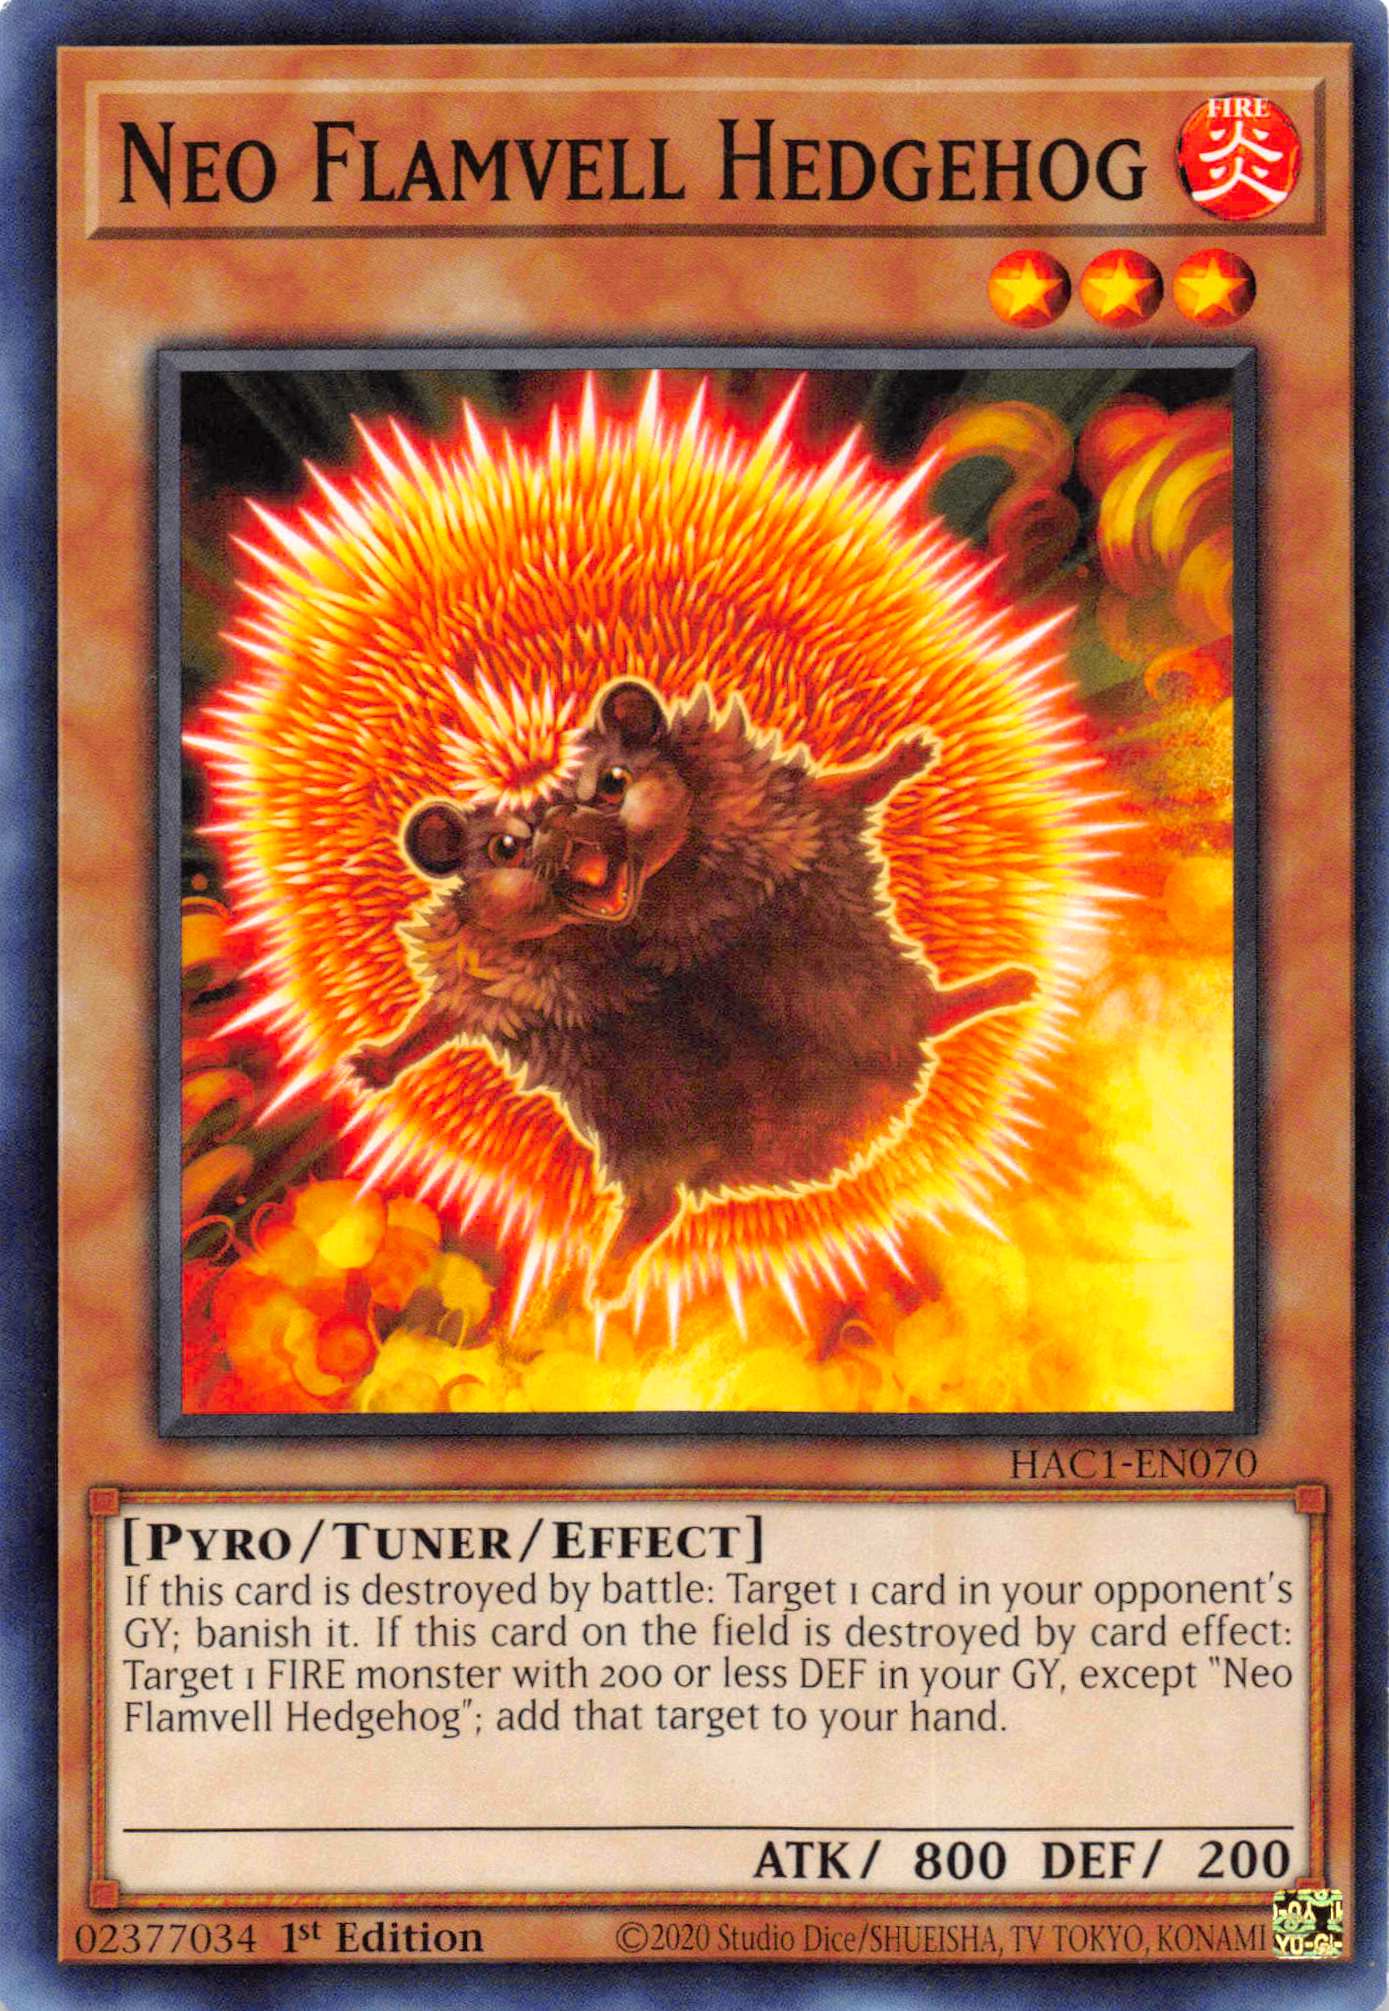 Neo Flamvell Hedgehog [HAC1-EN070] Common